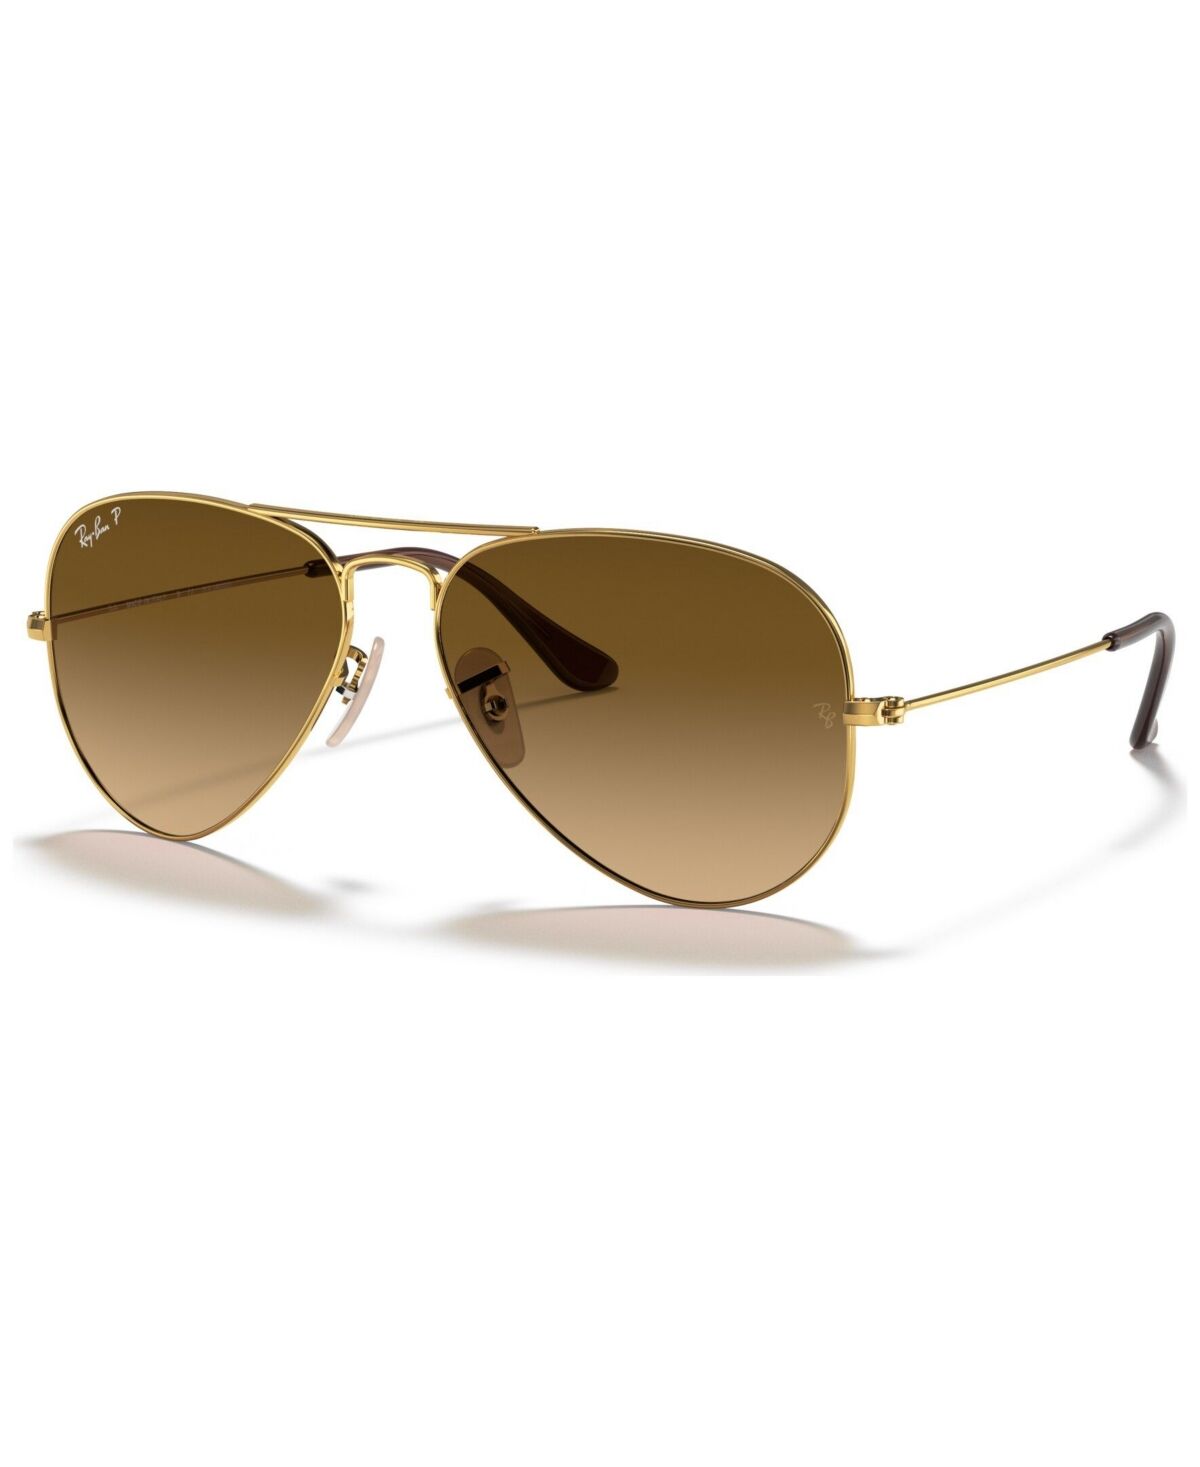 Ray-Ban Unisex Polarized Sunglasses, RB3025 Aviator Classic - GOLD/BROWN POLAR